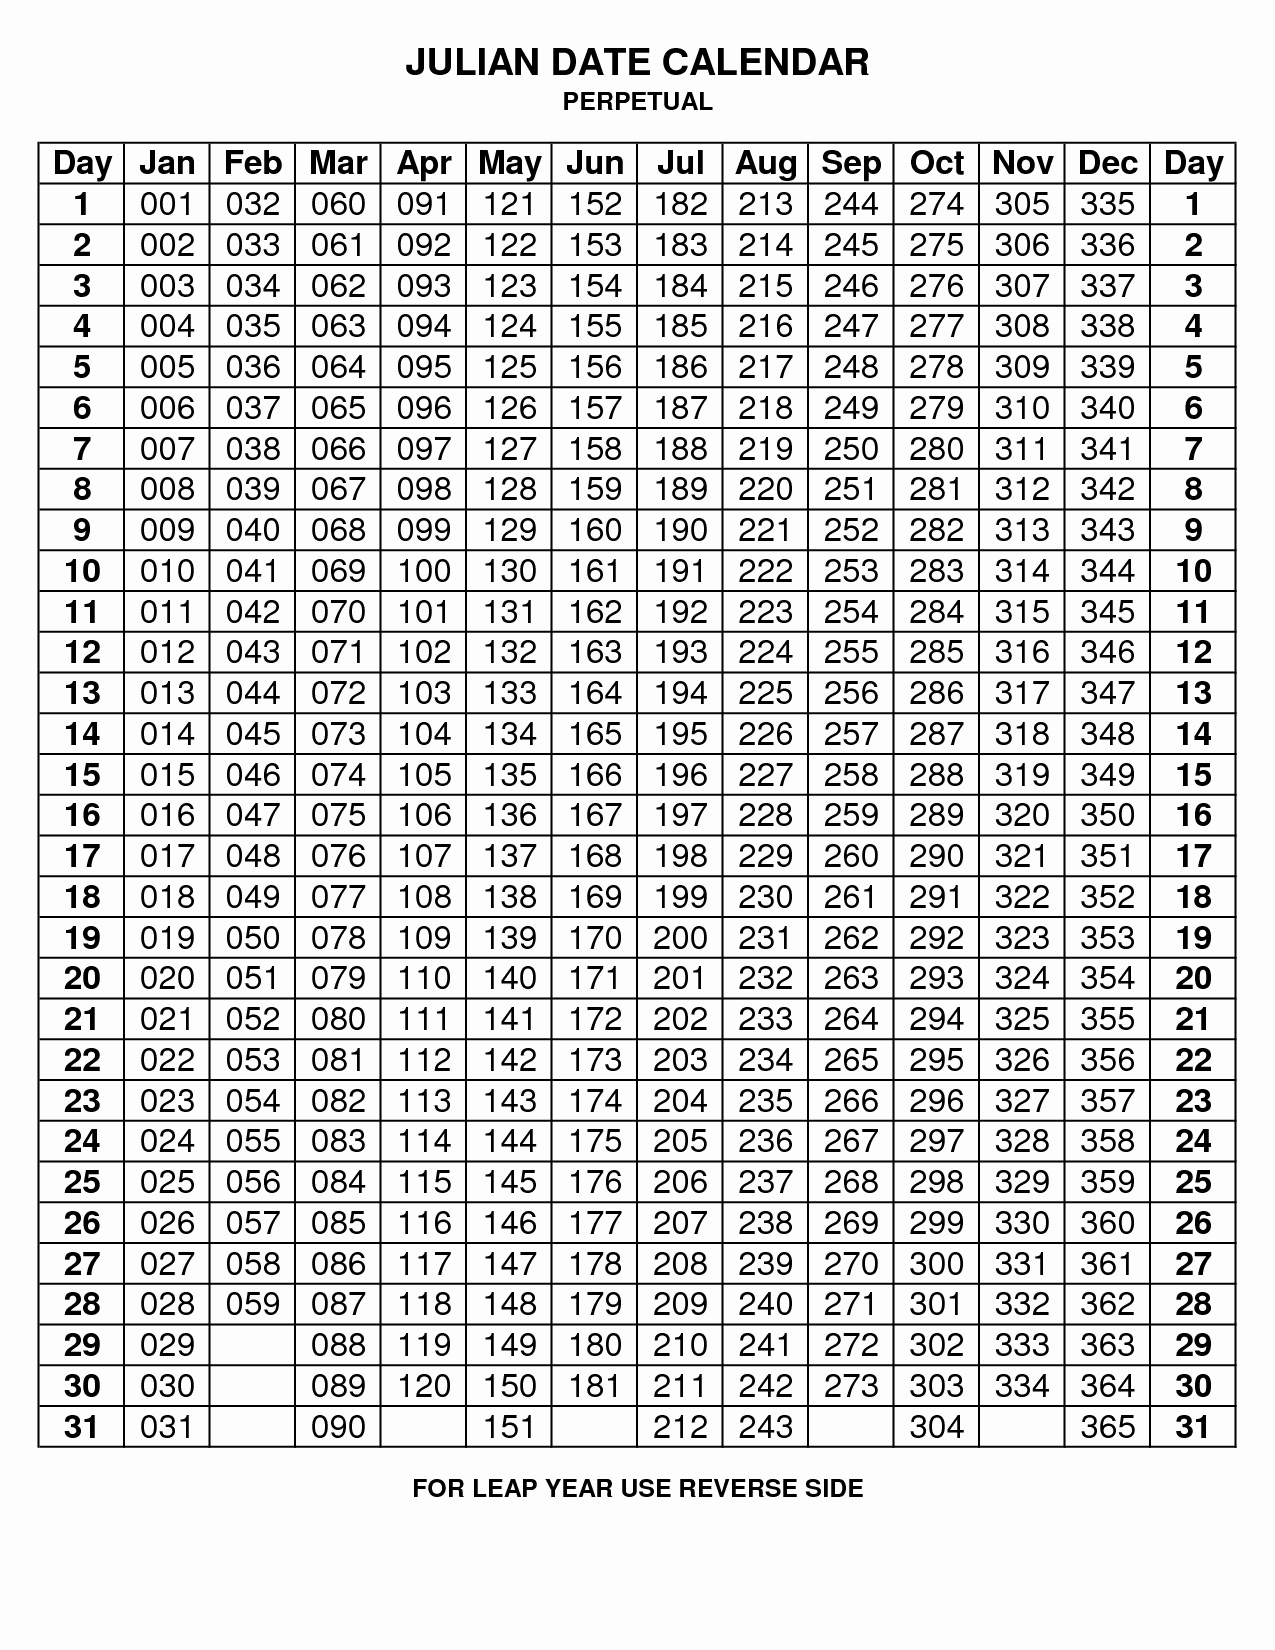 Depo Provera Perpetual Calendar To Print - Calendar  Depo Provera Schedule 2021 Pdf